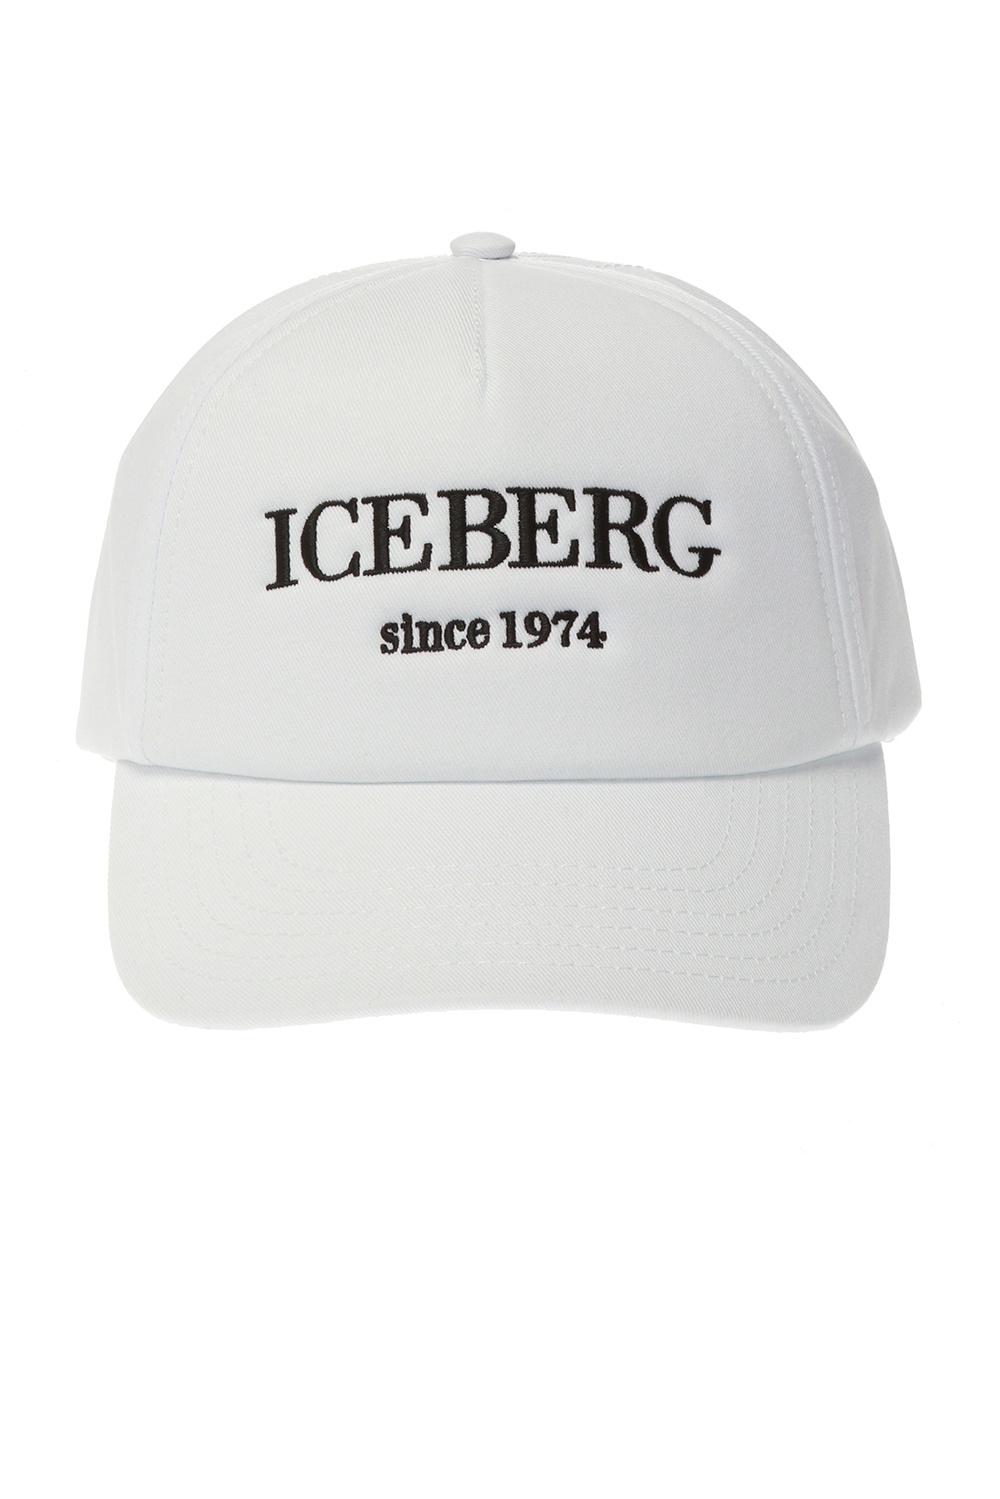 White Baseball cap with logo Iceberg - Vitkac GB